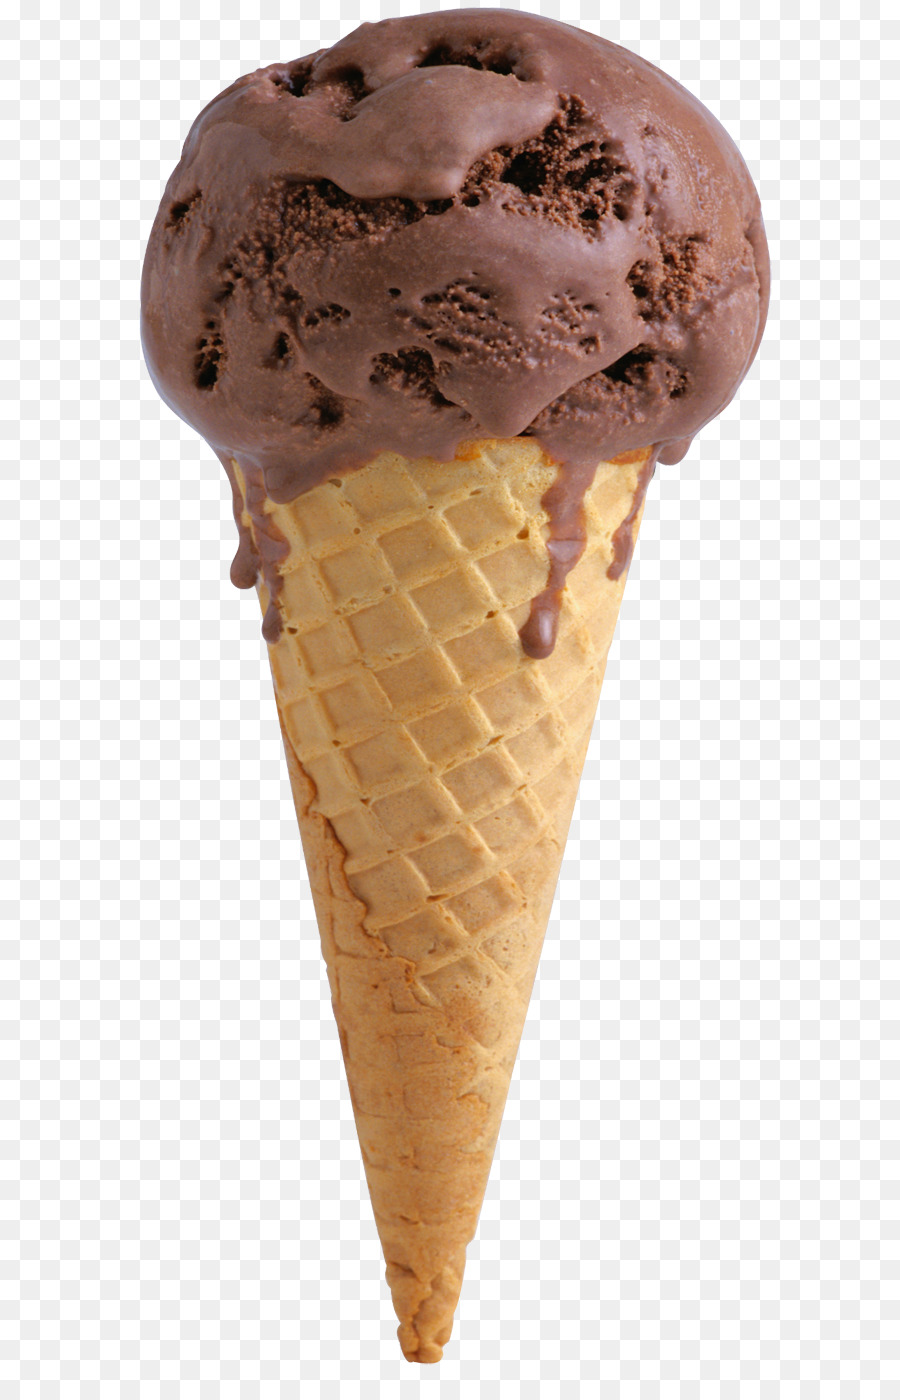 Ice Cream Cones Chocolate ice cream Strawberry ice cream - chocolate bar png download - 700*1400 - Free Transparent Ice Cream Cones png Download.